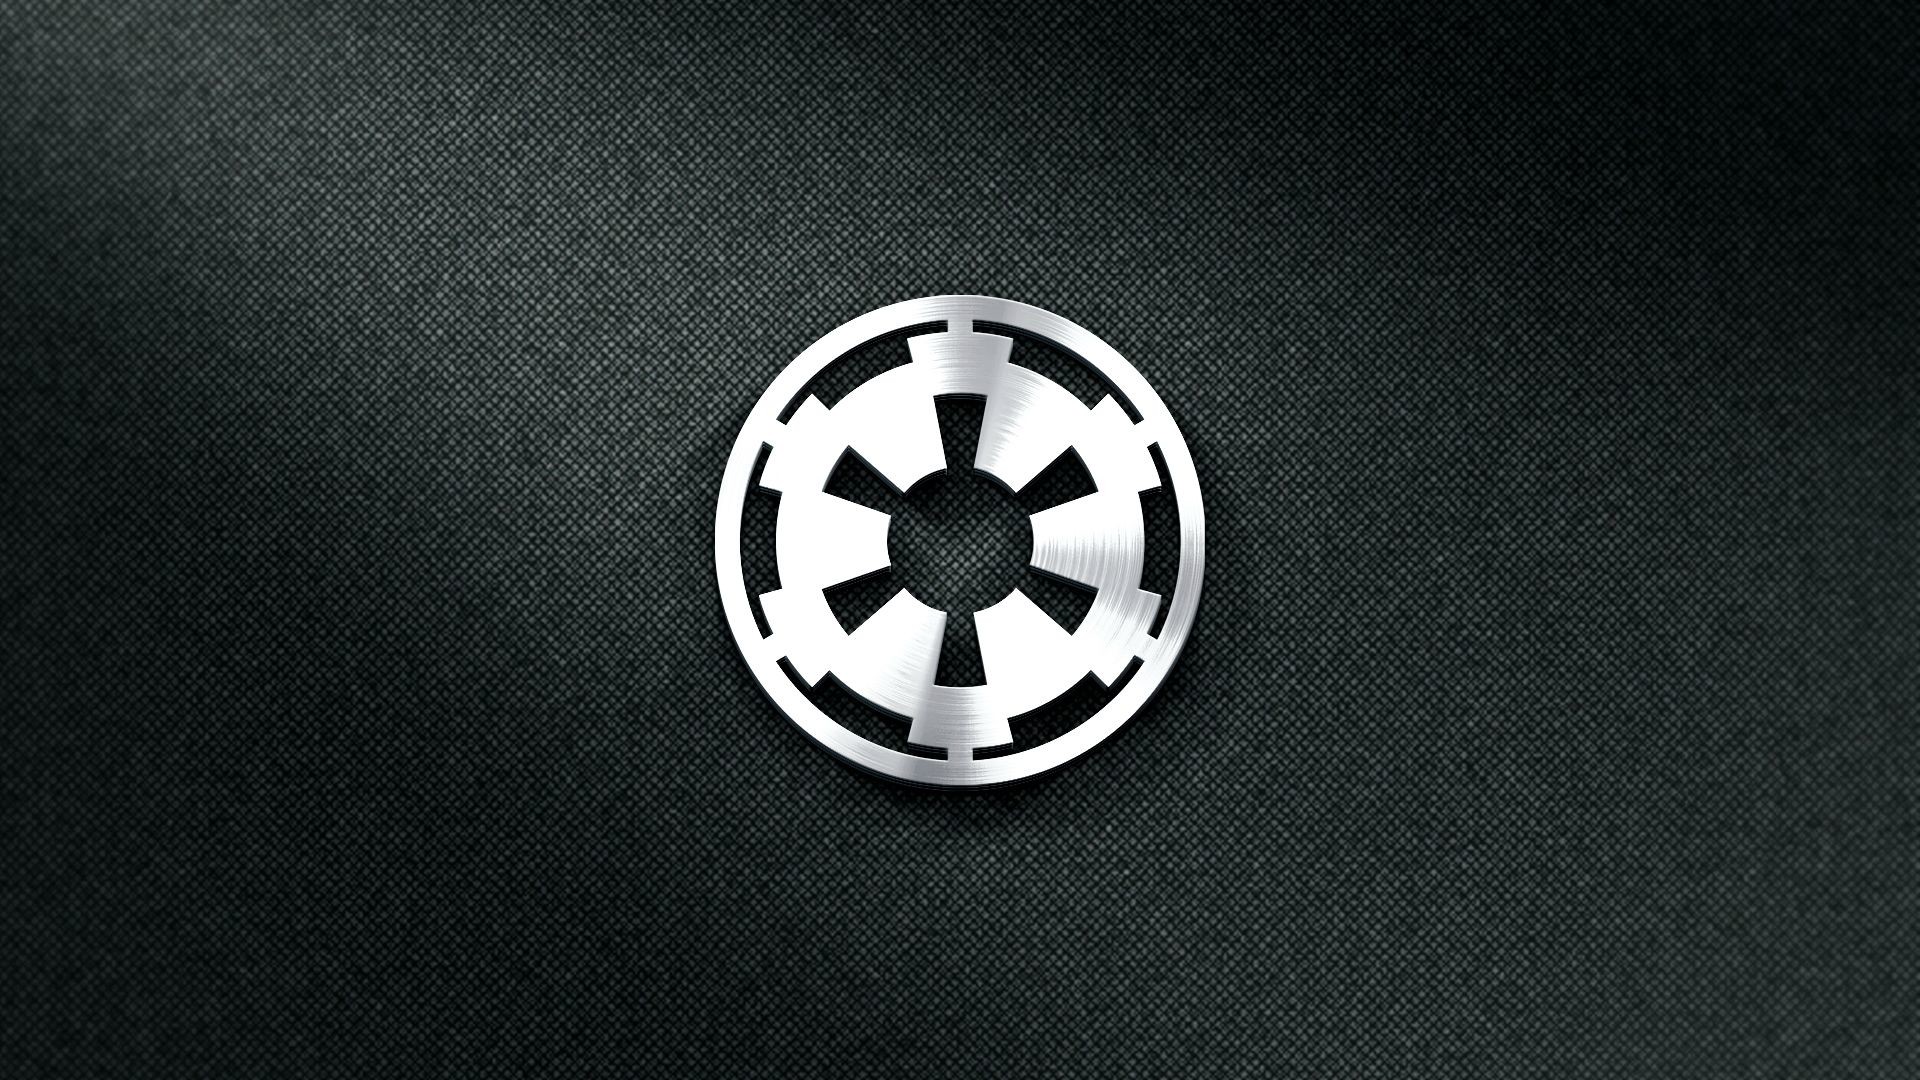 star wars imperial wallpaper,logo,wheel,spoke,emblem,rim